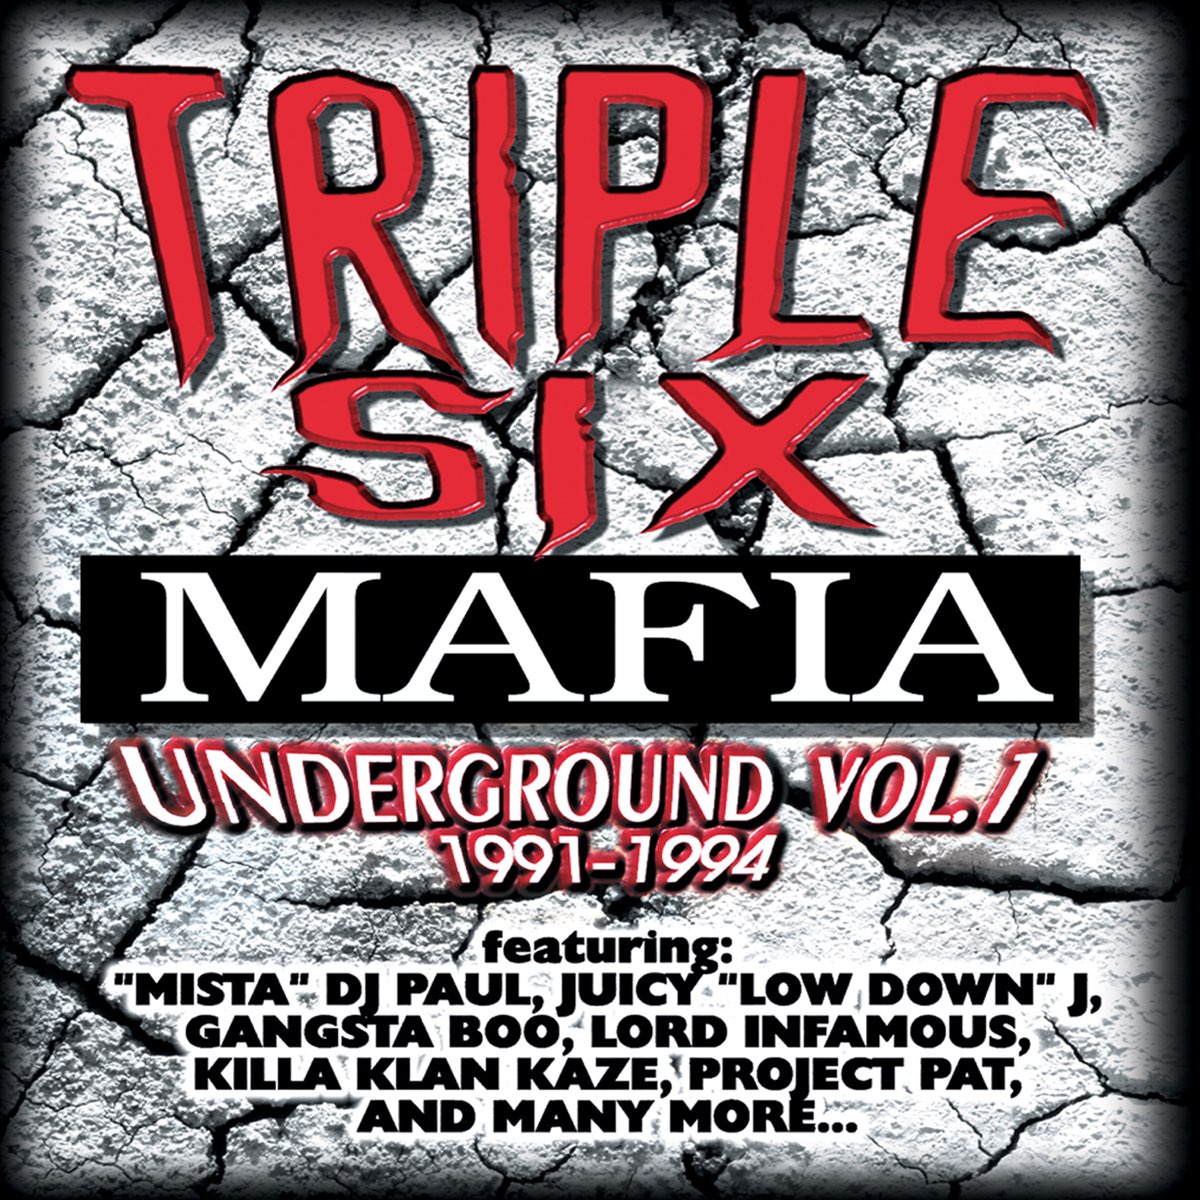 ‎Underground Vol. 1: 1991-1994 - Album by Triple 6 Mafia - Apple Music